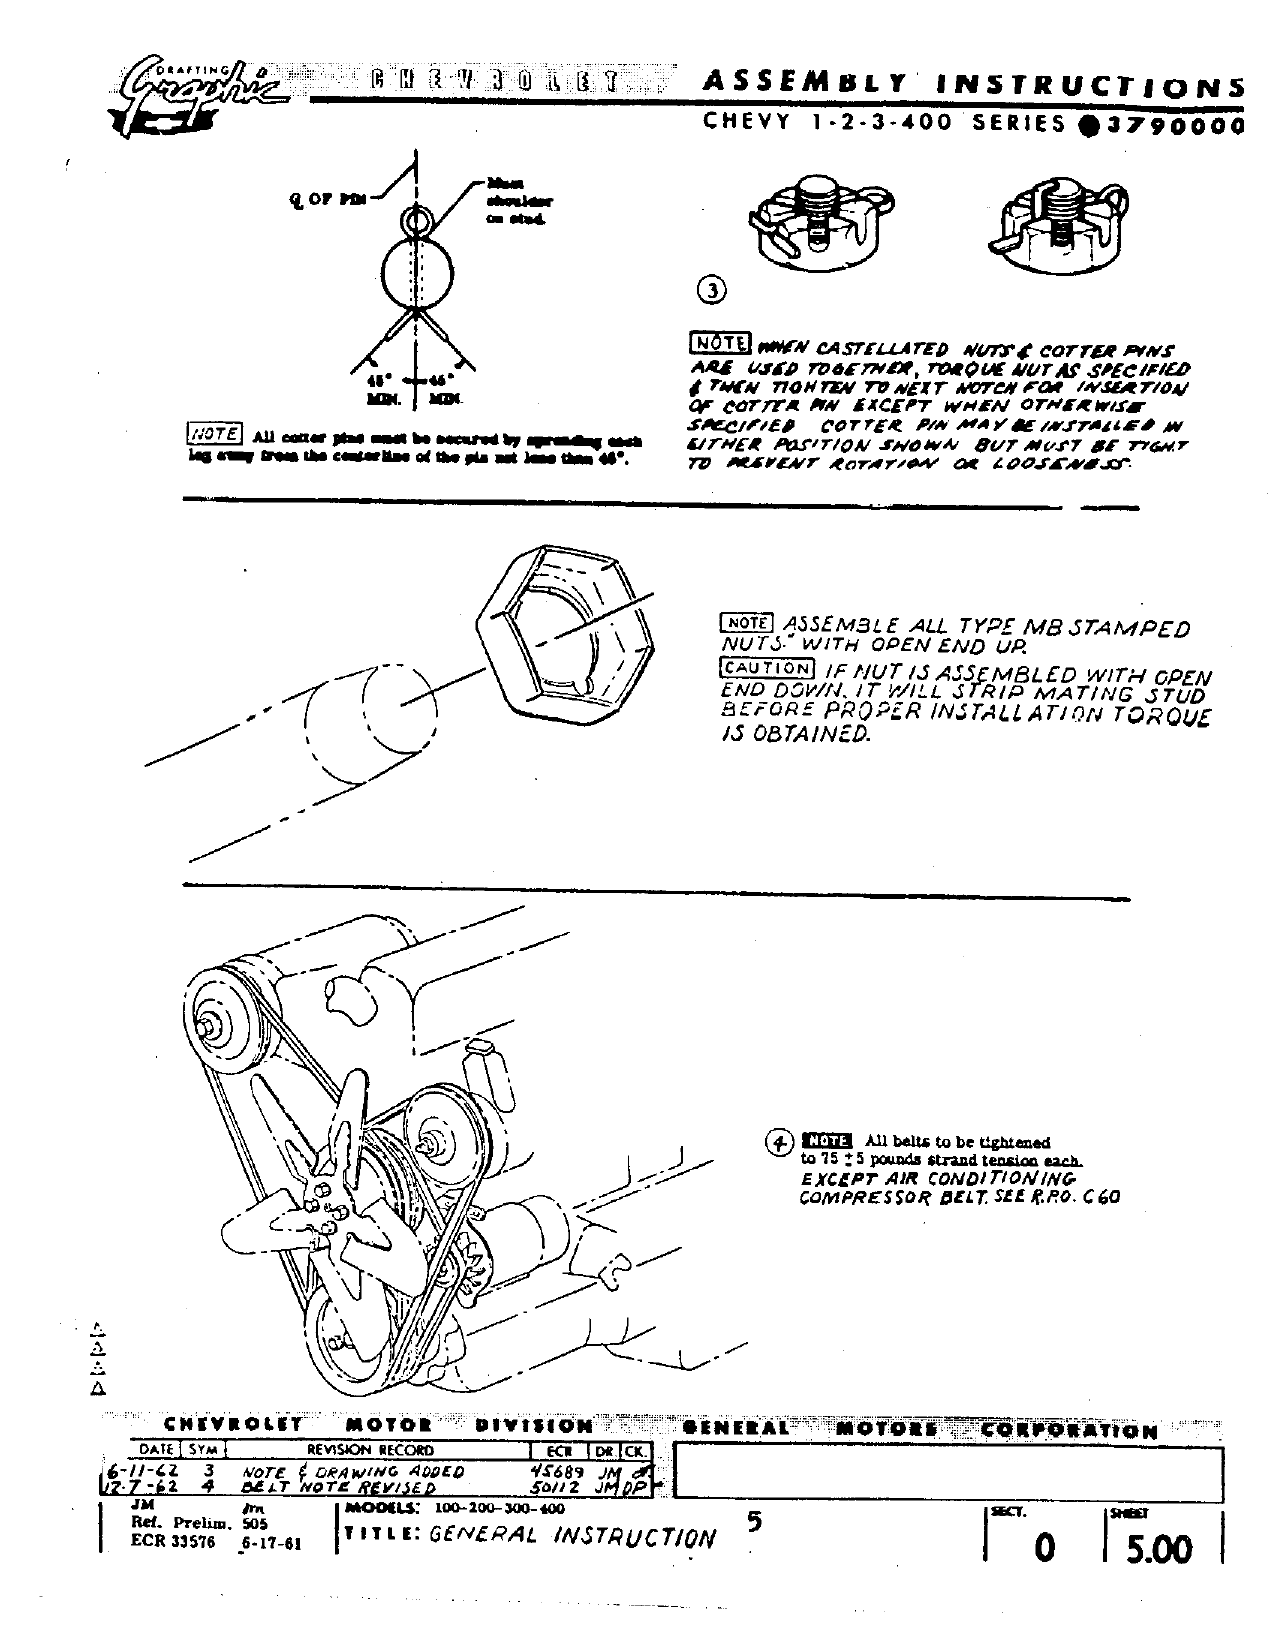 1962-1979 Chevrolet Nova shop manual Preview image 5